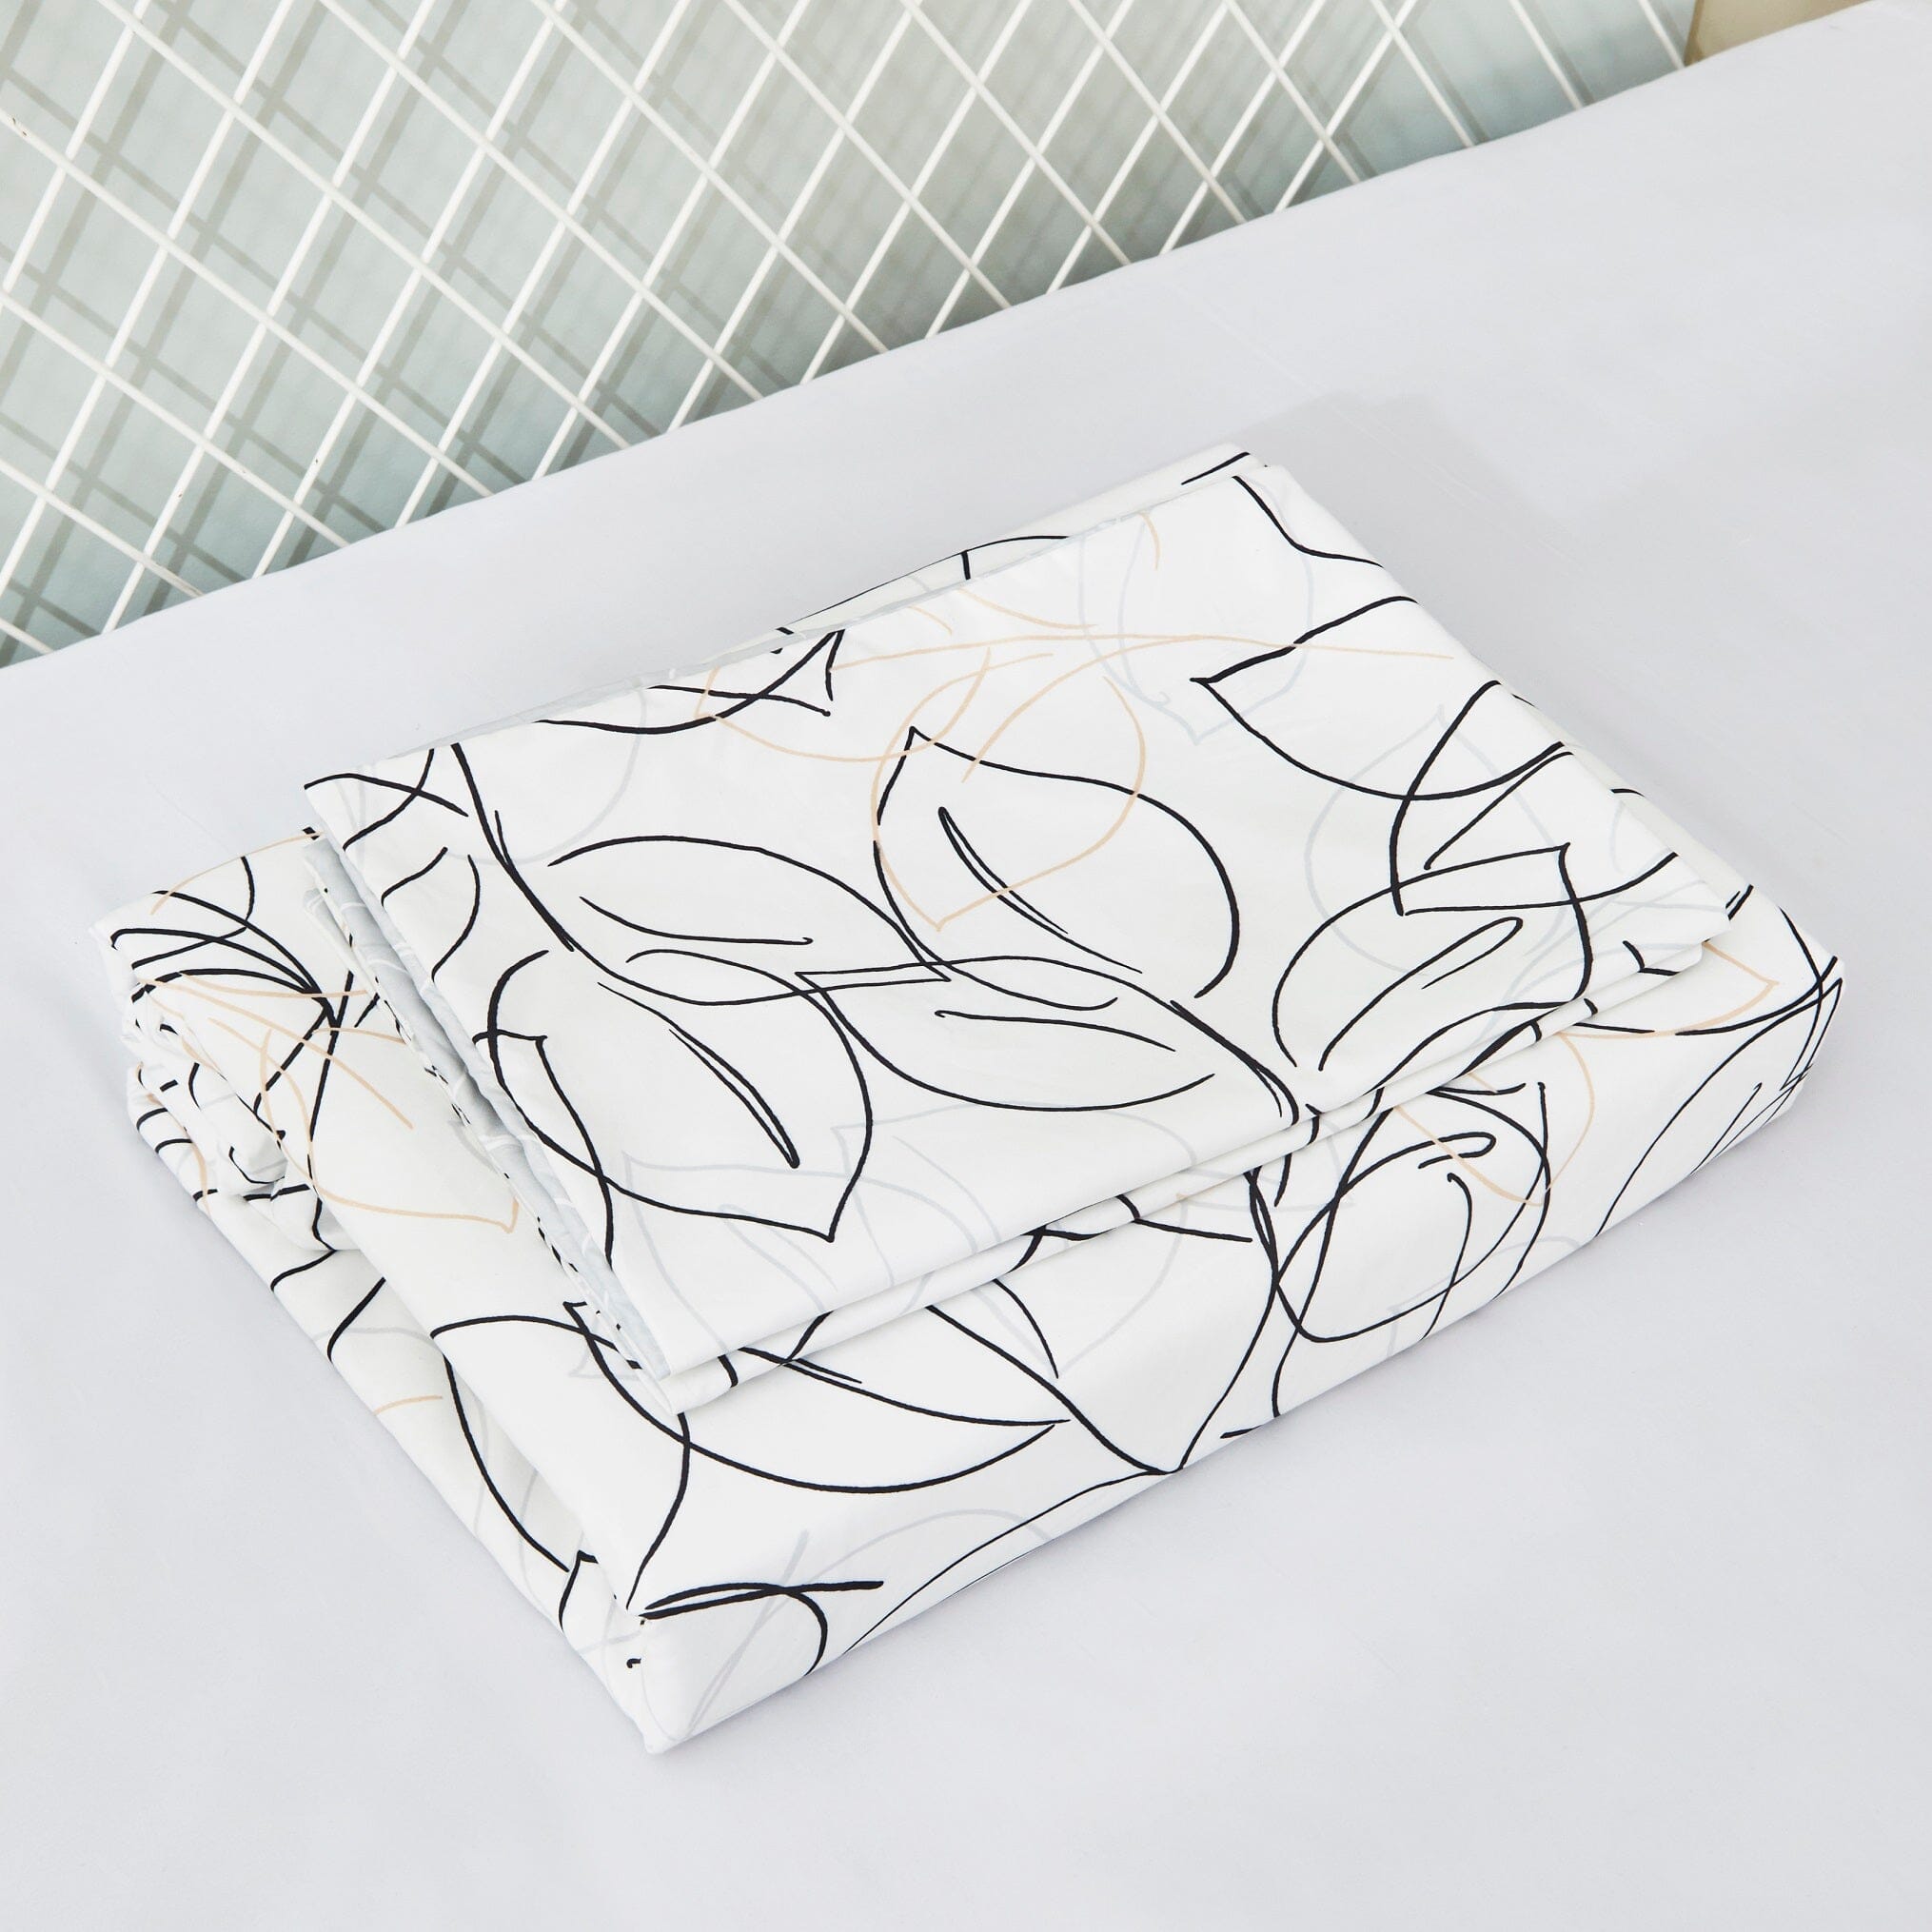 Tache Modern Abstract Leaf Line Art Foliage White Grey Black Gold Flat Sheet Only (TJ3571) - Tache Home Fashion